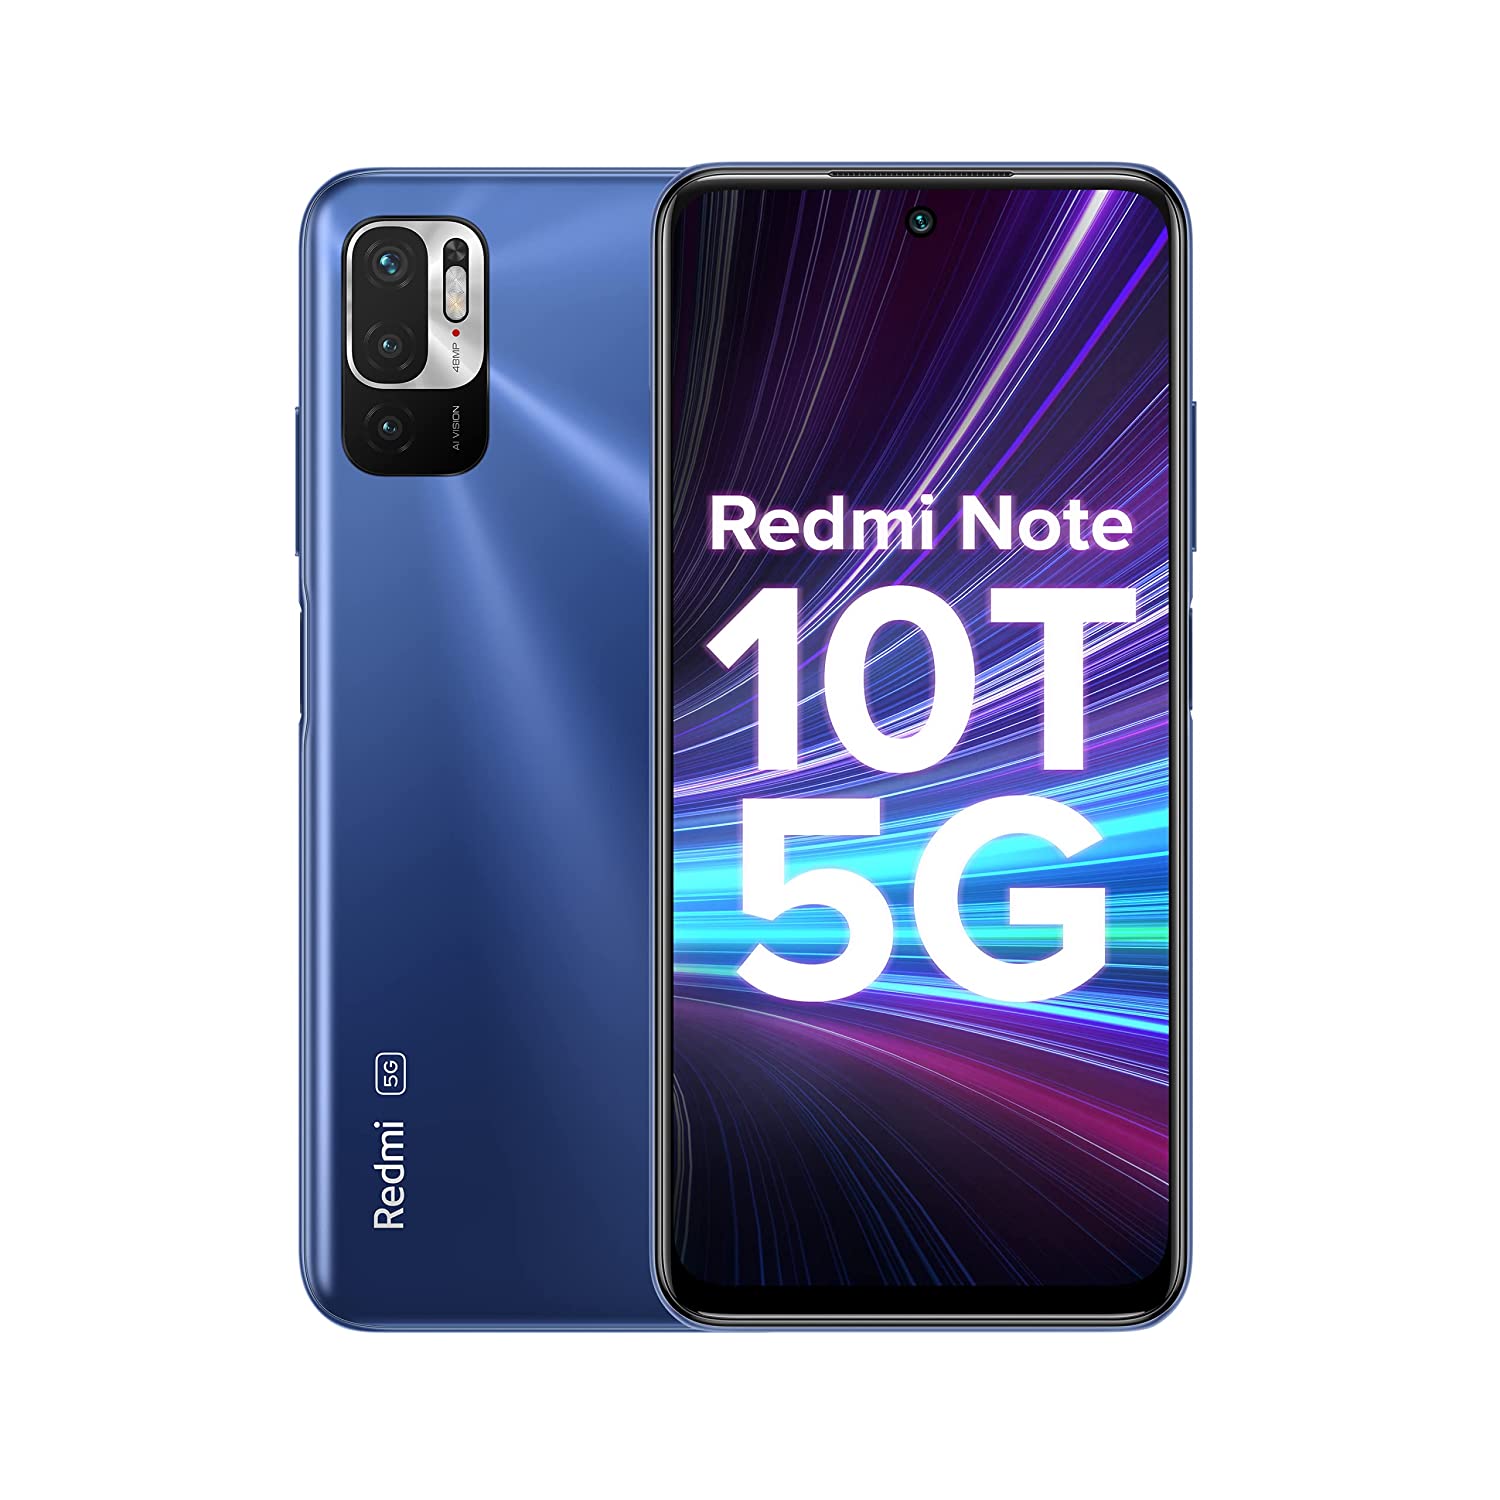 Buy Redmi Note 10T 5G (Metallic Blue, 4GB RAM, 64GB